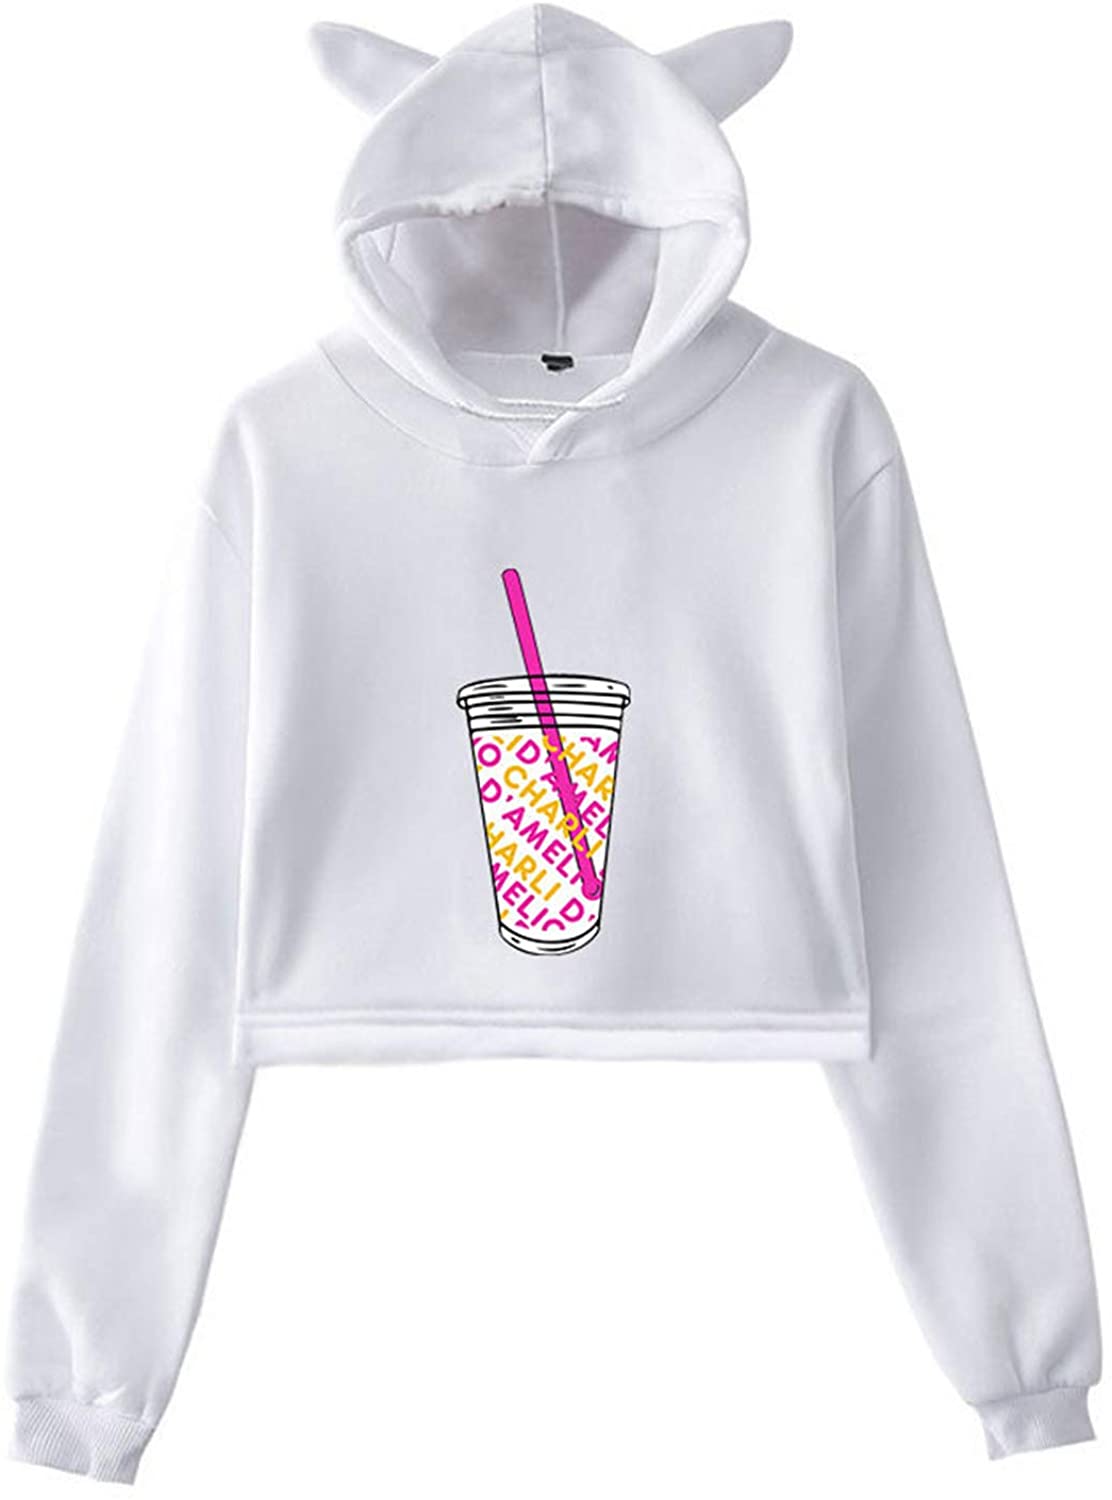 JHDESSLY Women Hoodie Sweatshirts Ice Cute Coffee Splatter Cat Print Crop Top Girl Pullover Sweatshirts